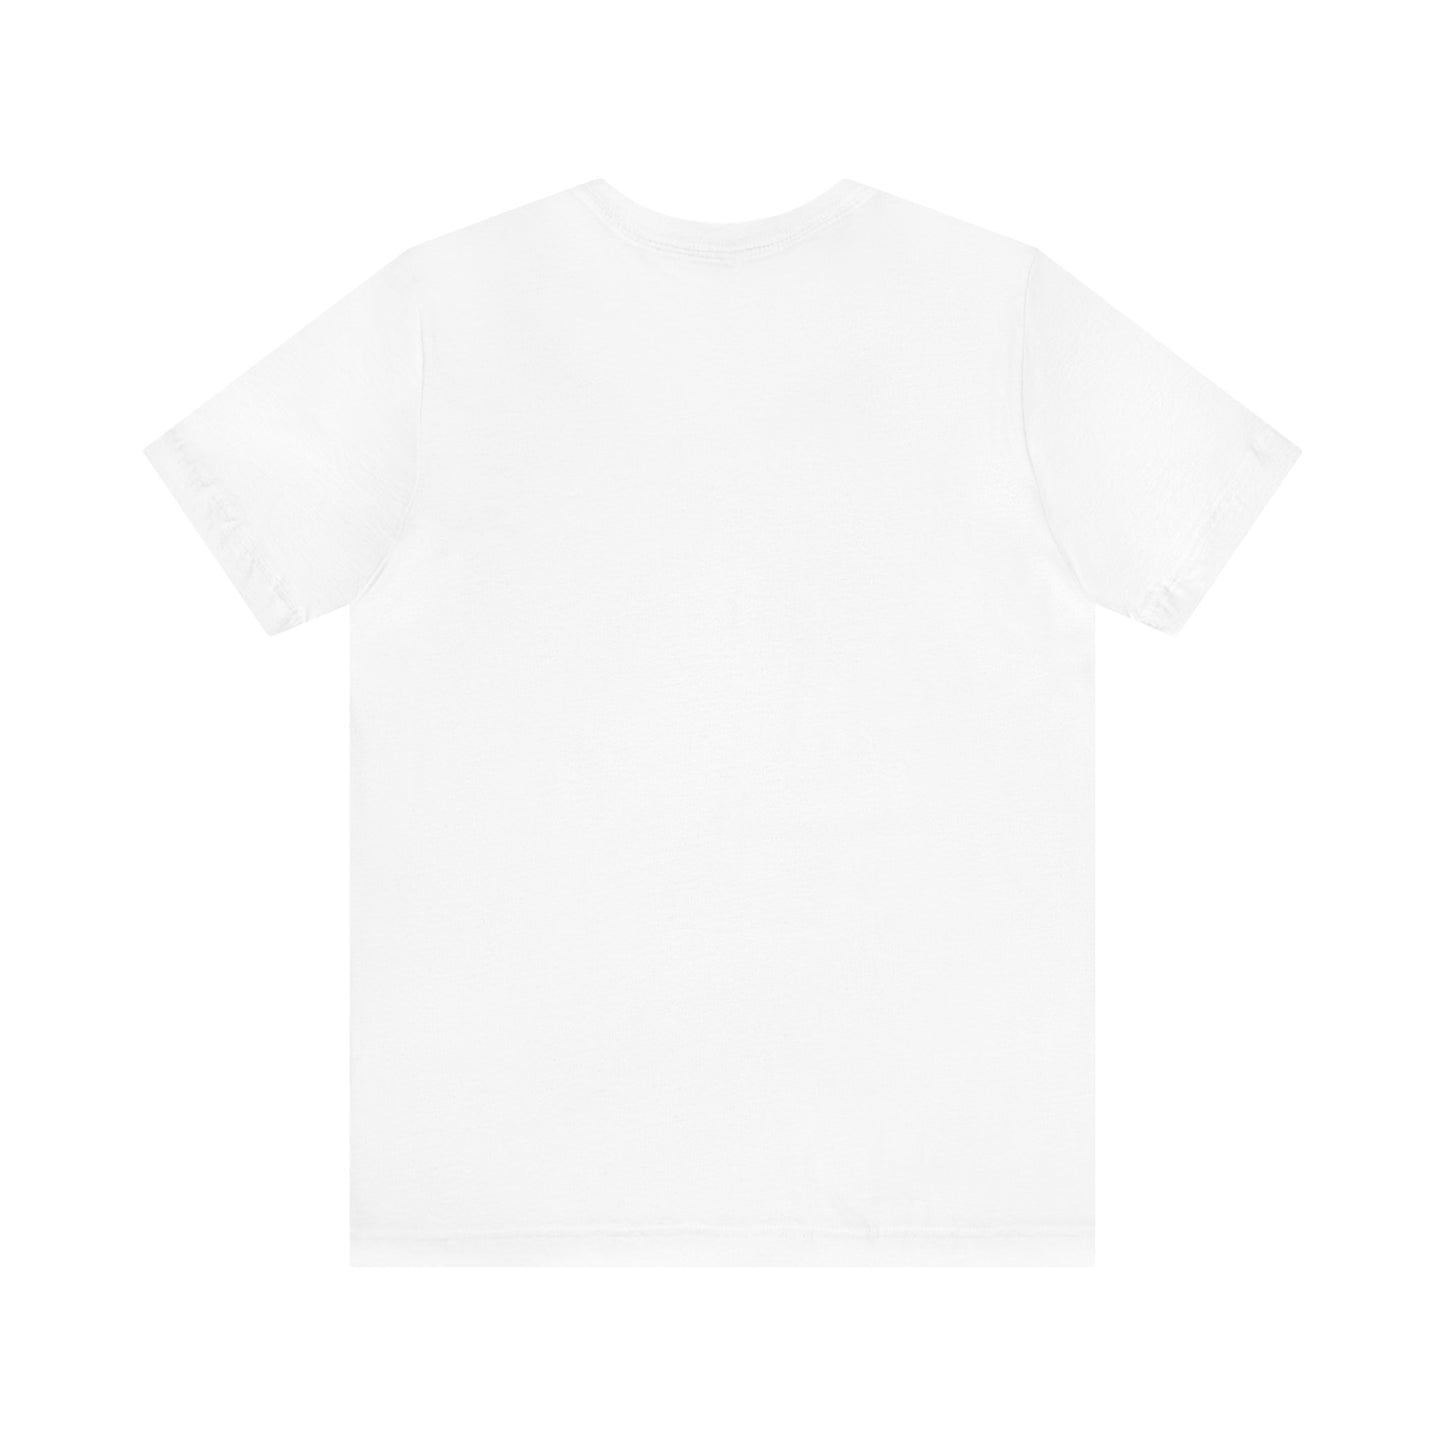 I LUV HIT Unisex T-Shirt